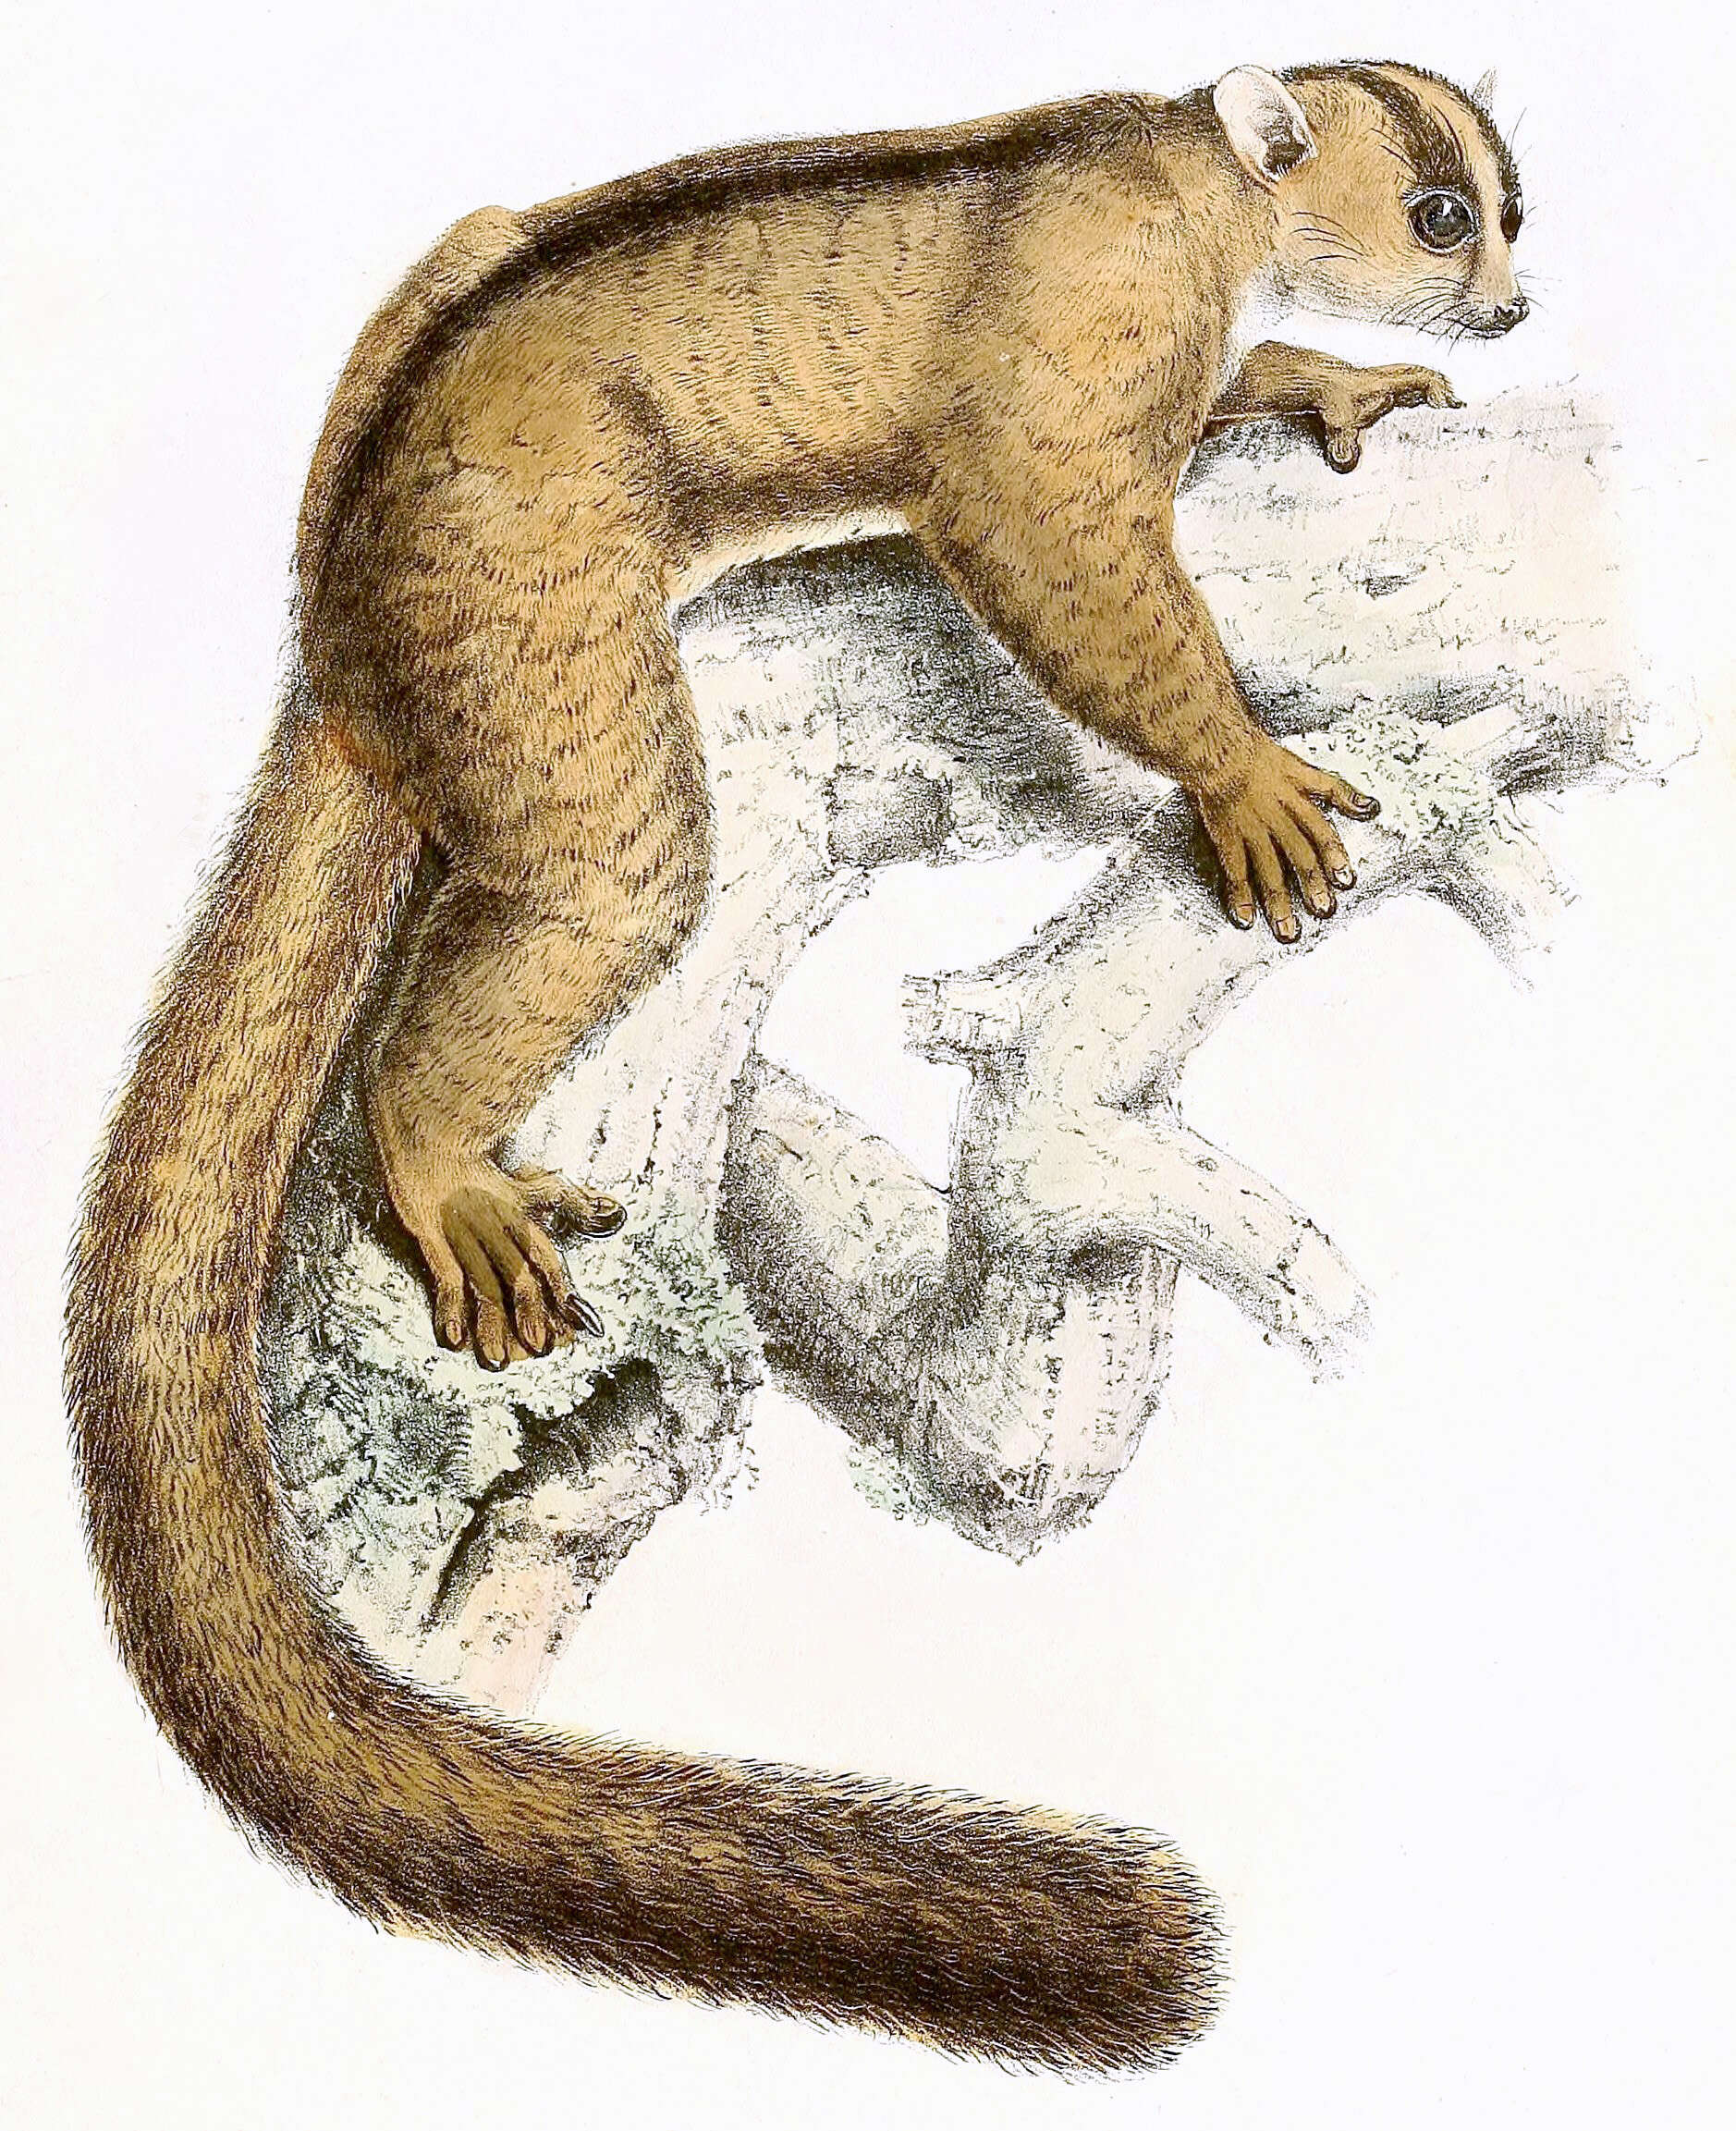 Image of Eastern Fork-marked Lemur